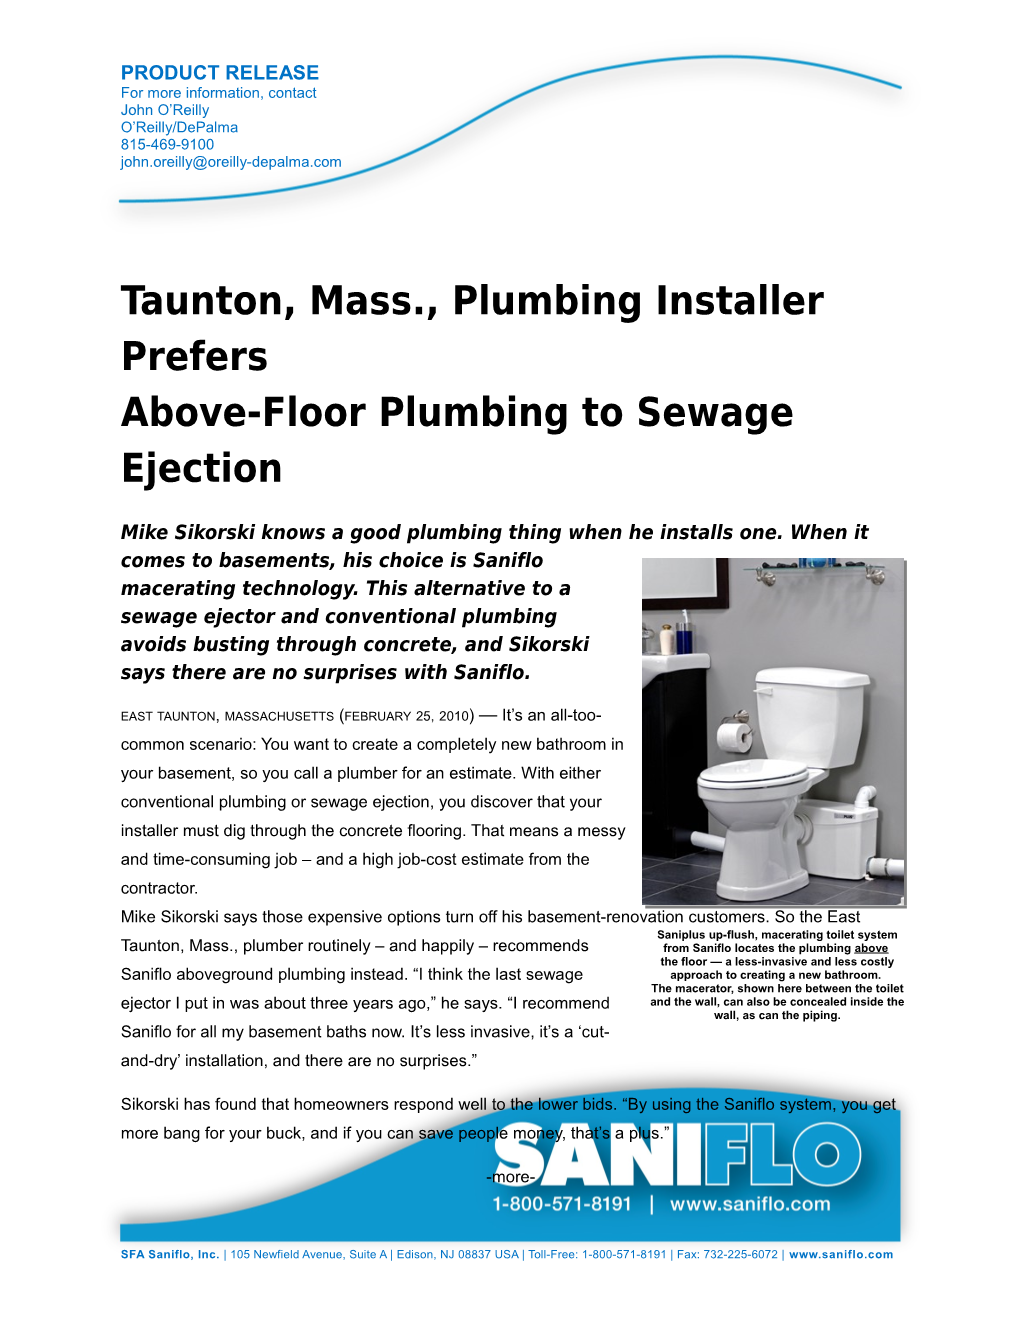 Taunton, Mass., Plumbing Installer Prefers